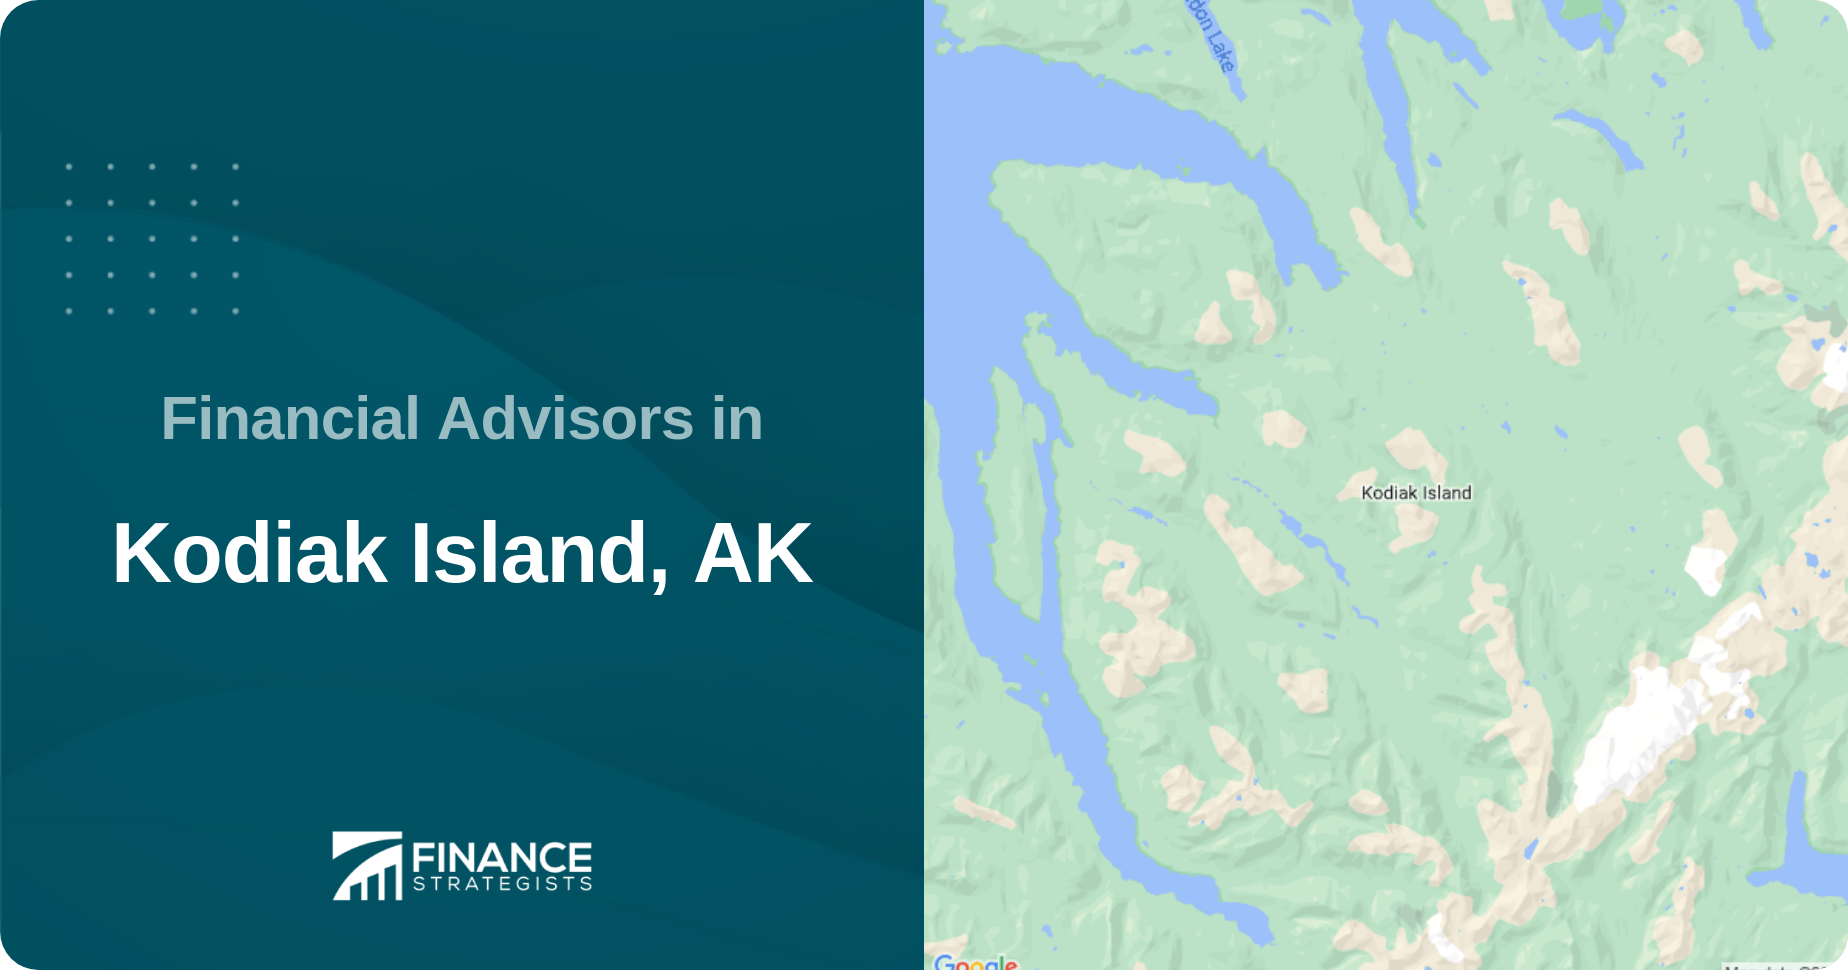 Financial Advisors in Kodiak Island, AK